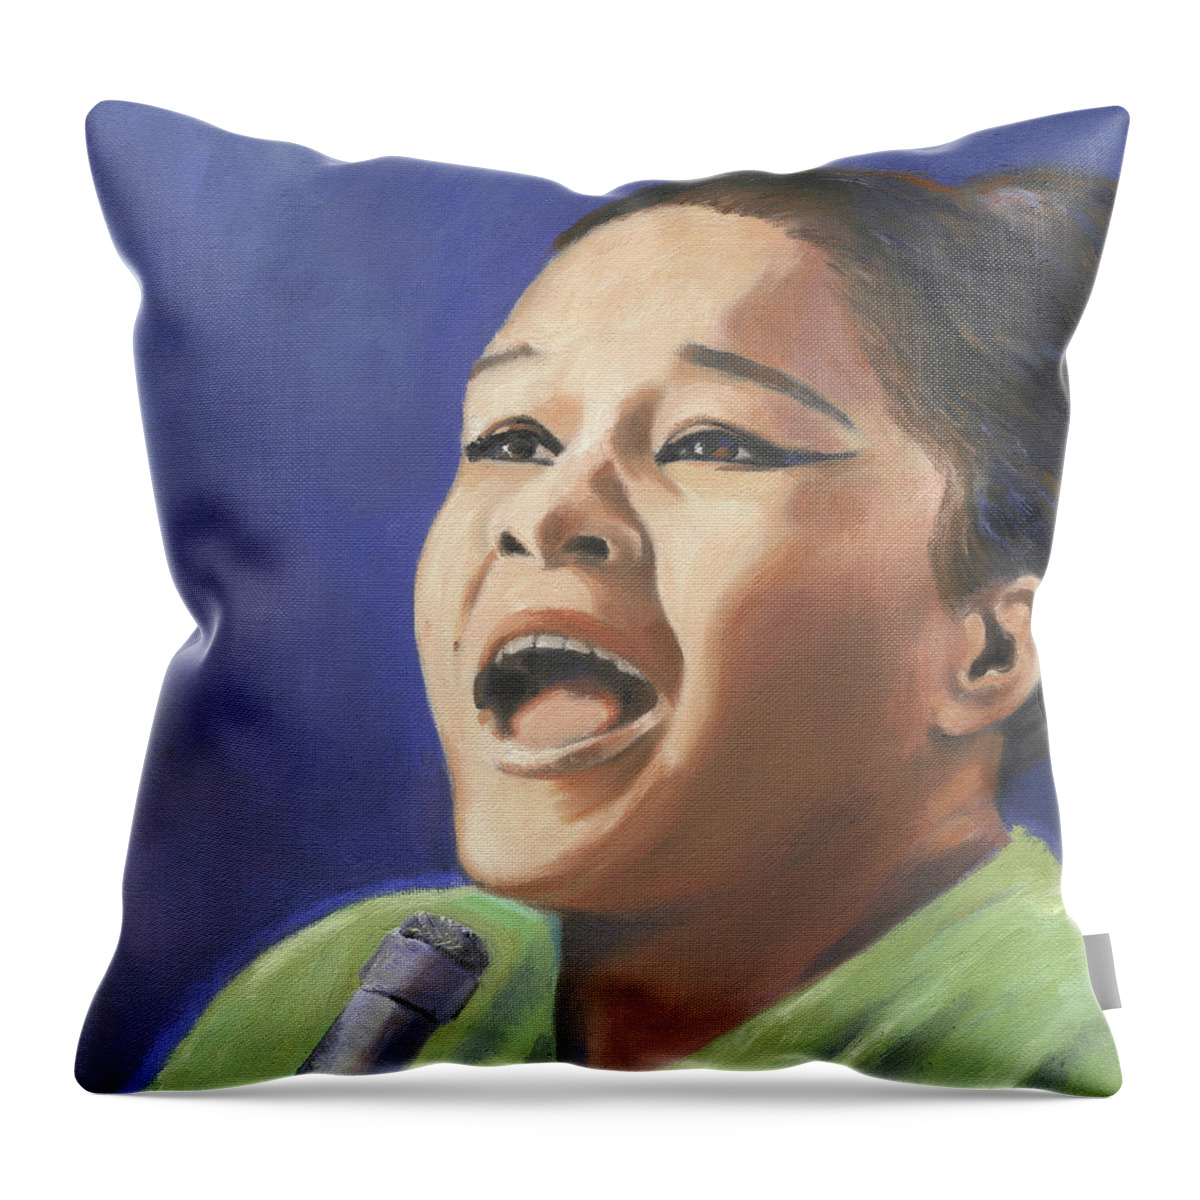 Singer Throw Pillow featuring the painting Etta James by Linda Ruiz-Lozito